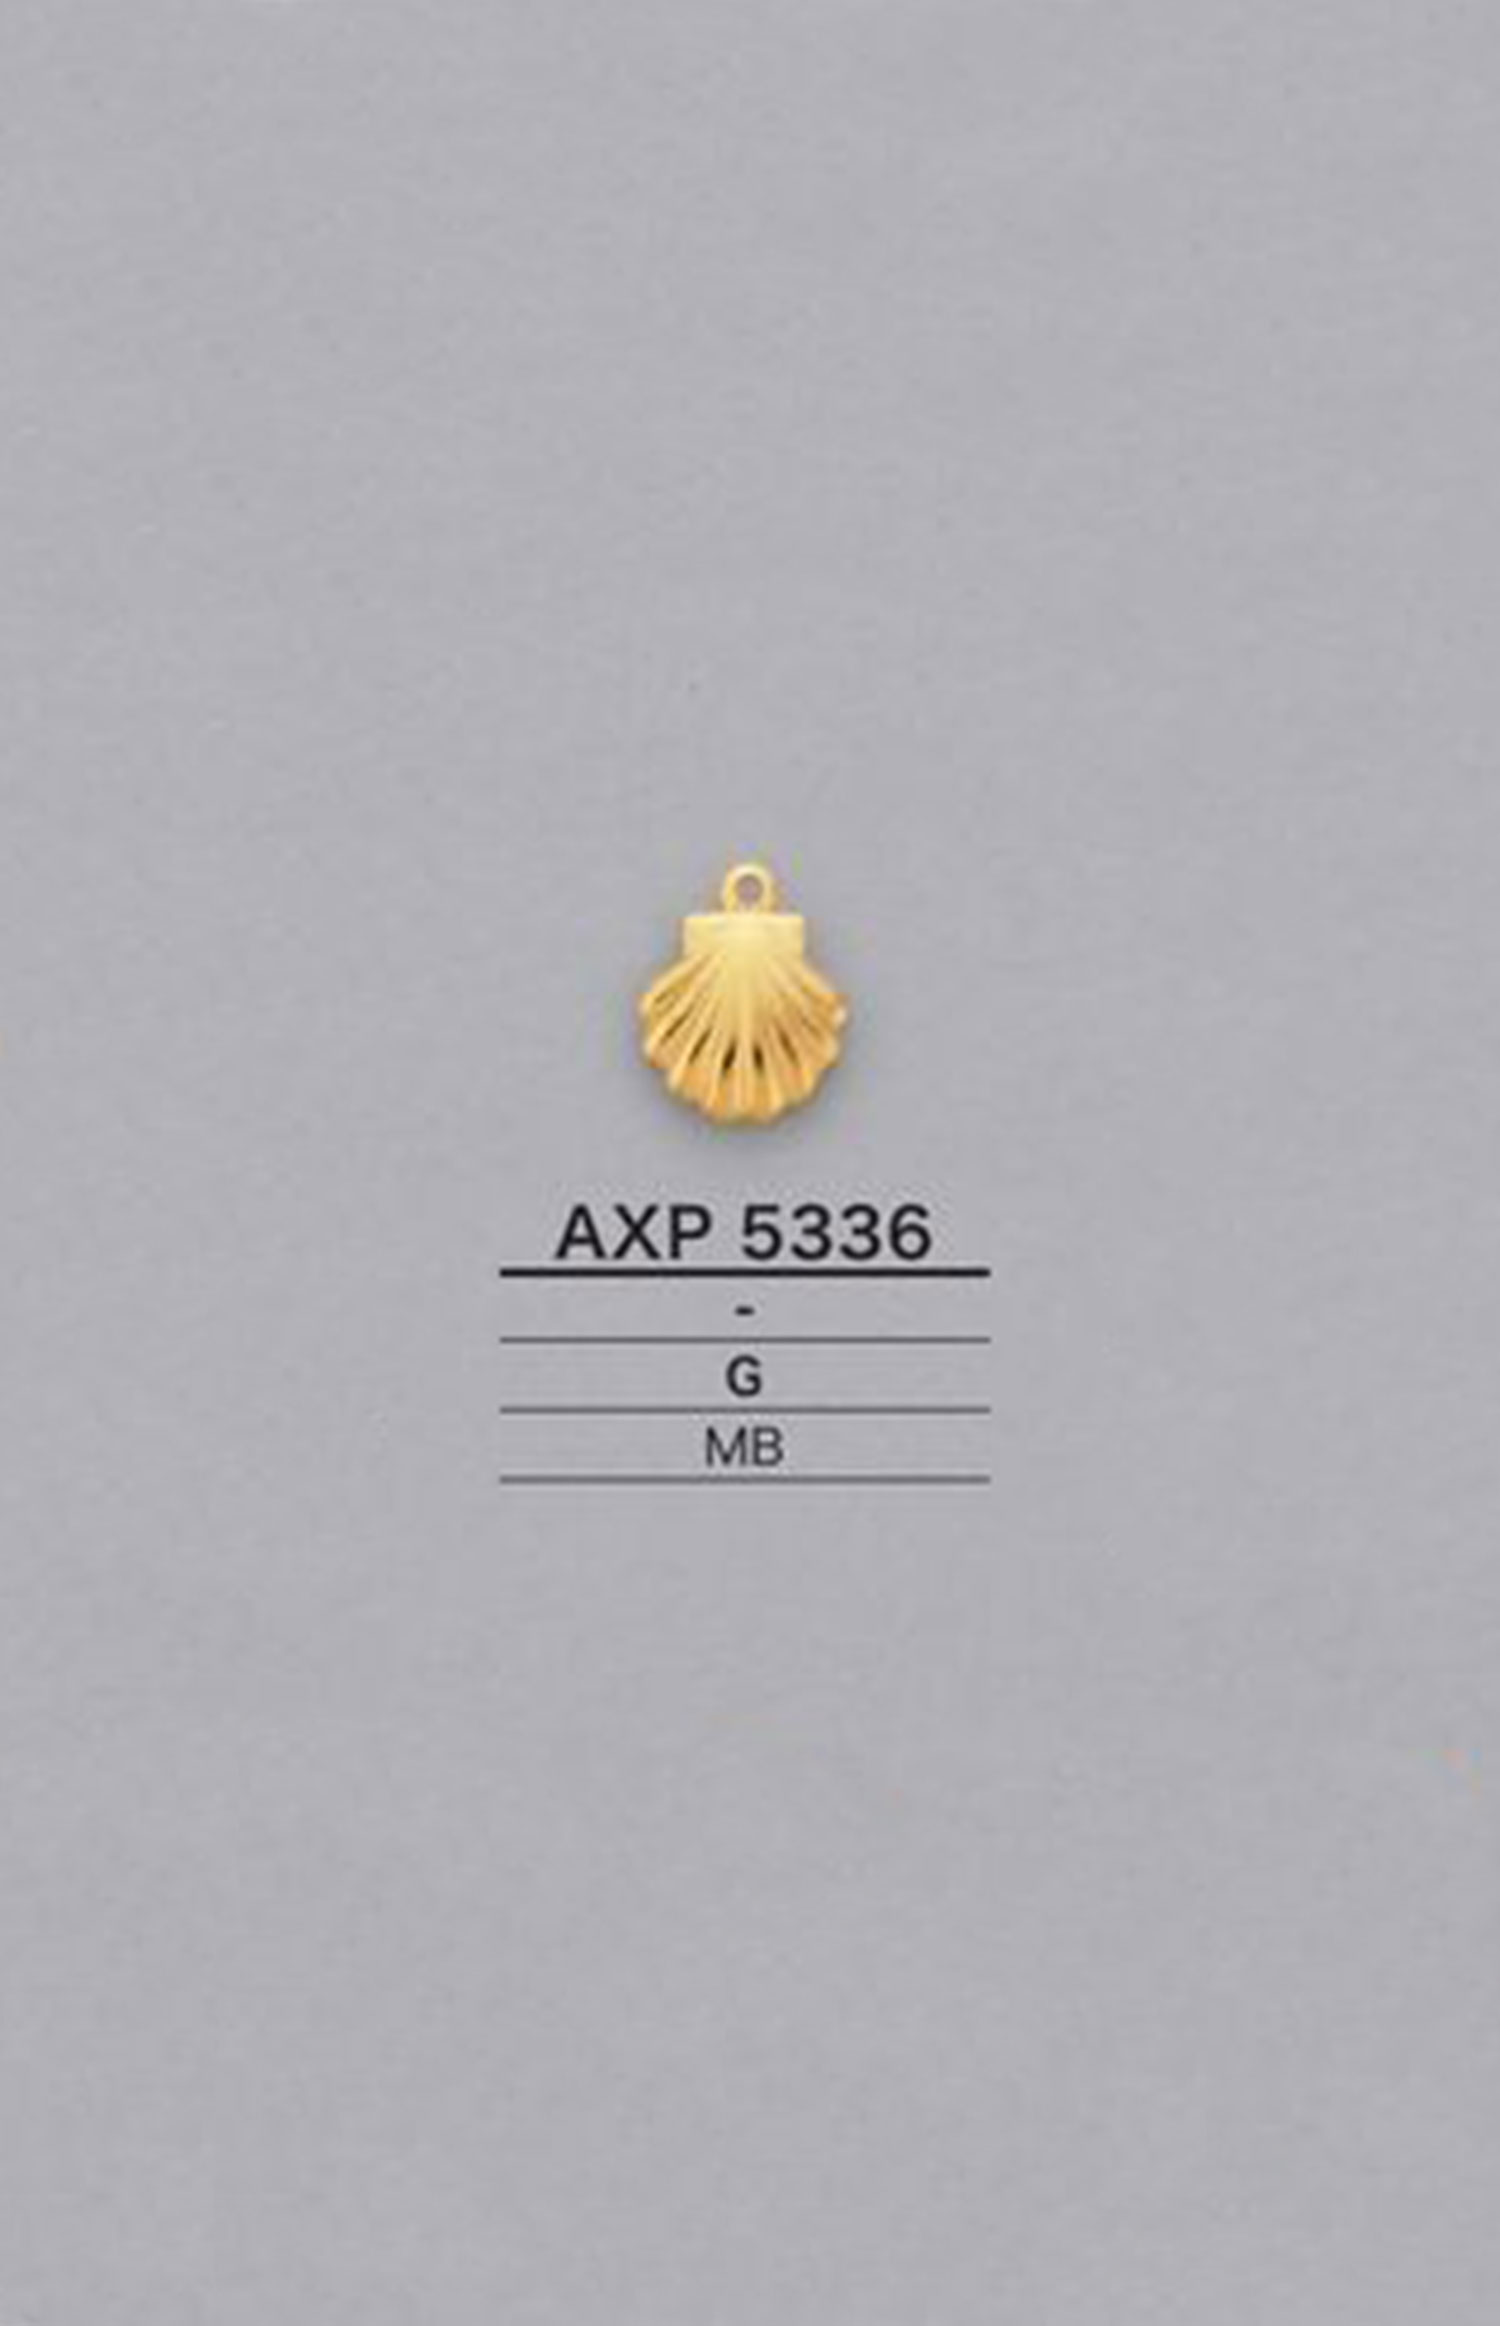 AXP5336 贝壳形图形元素零件[杂货等] 爱丽丝纽扣